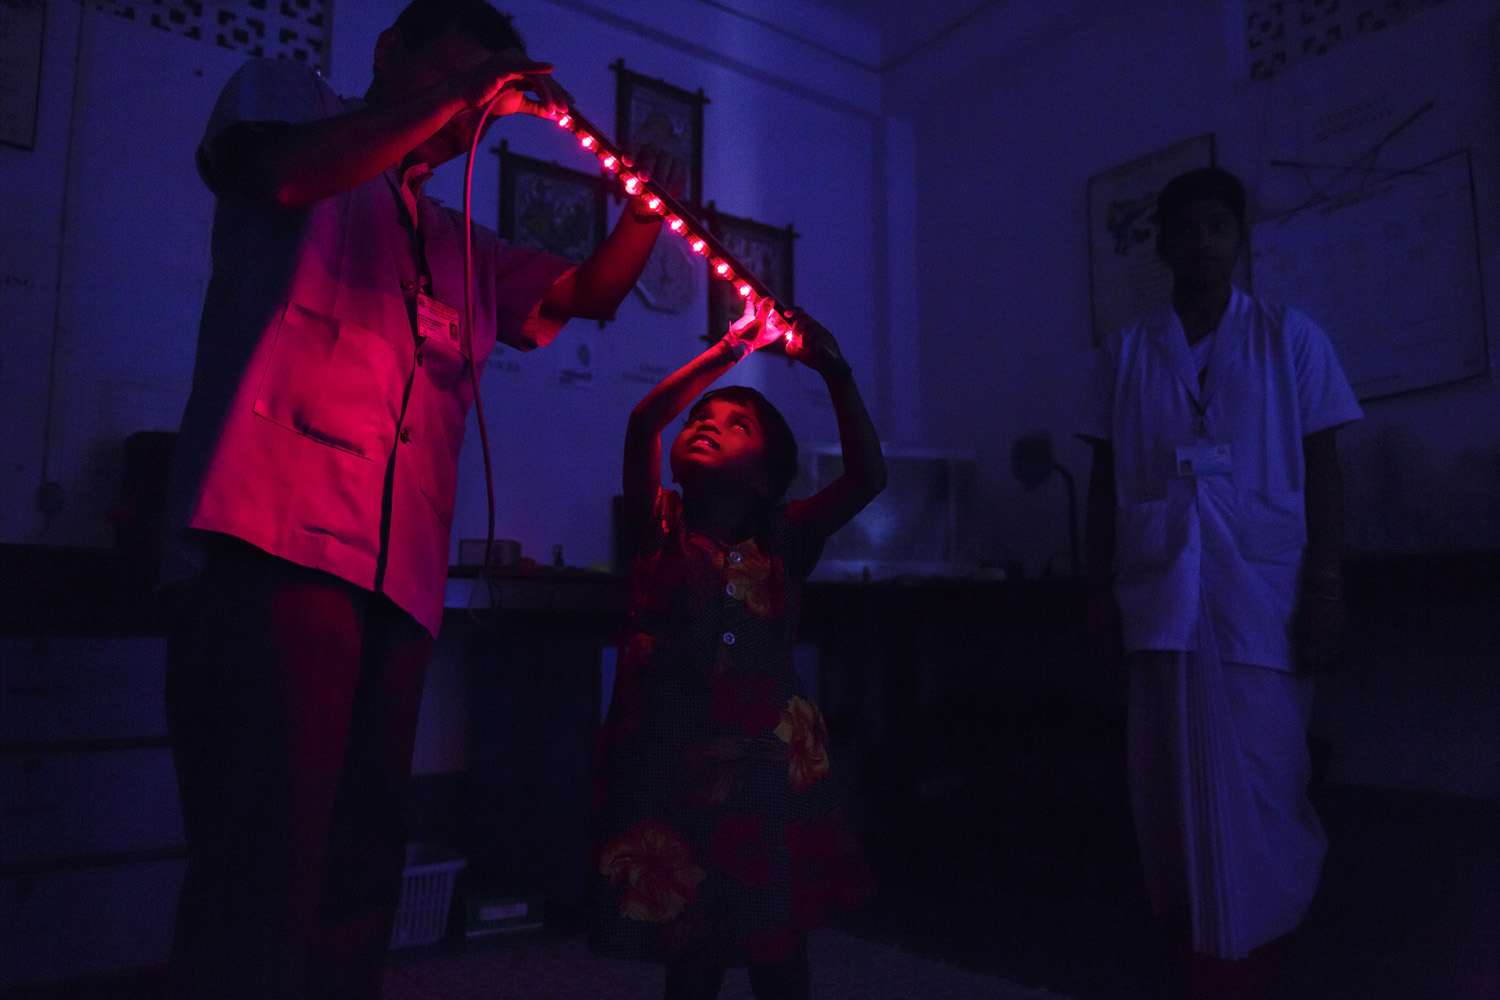 Anita Singh goes through eye stimulation light tests after eye surgery at Vivekananda Mission Hospital, Oct. 26, 2013 in West Bengal, India.